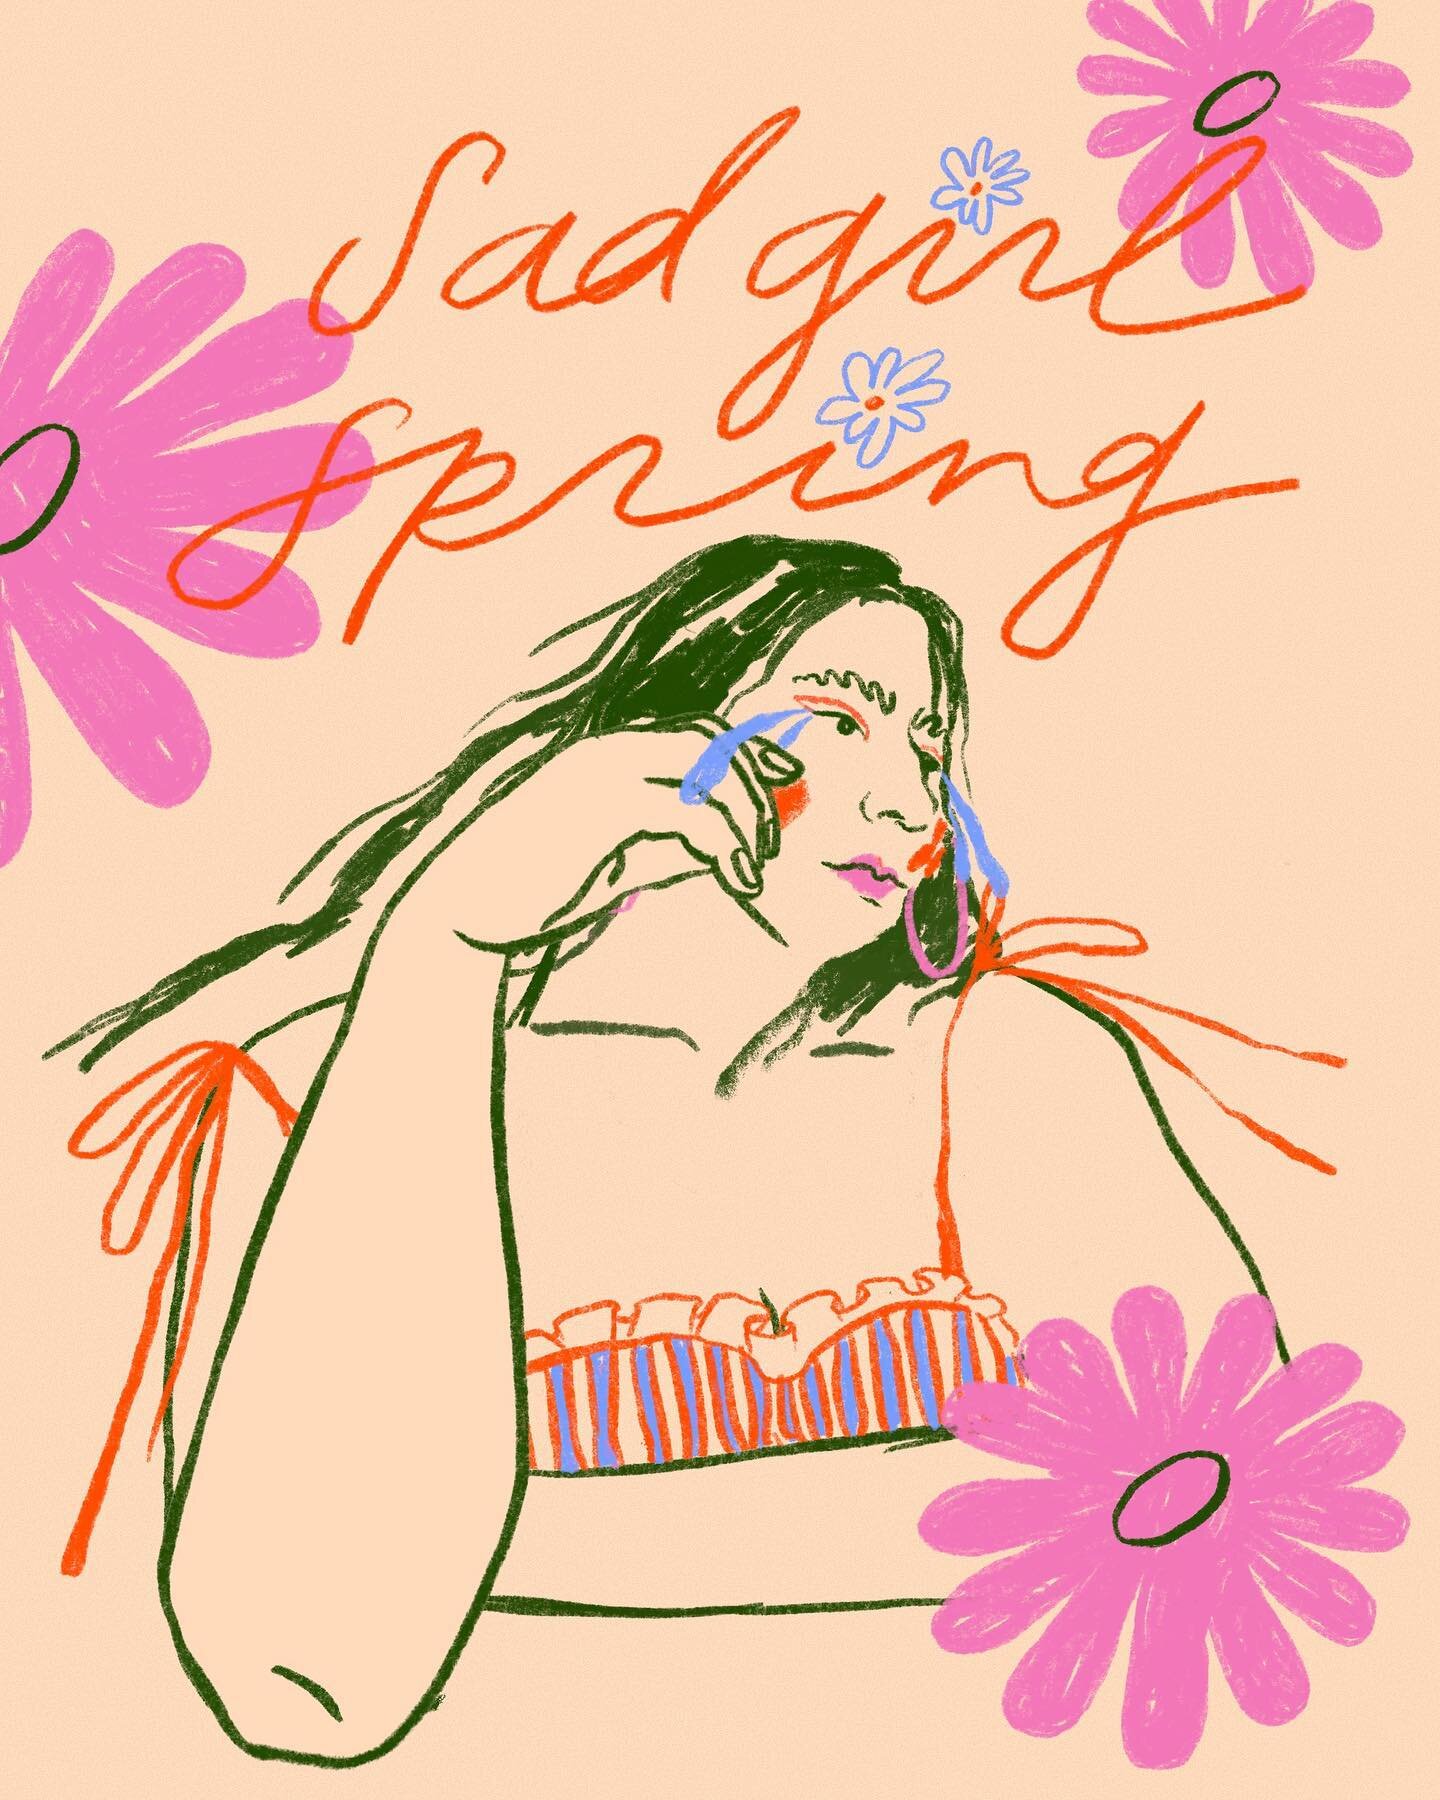 💧Sad girl spring vibes this month💧

#pov #selfie #explore #artist #illustrator #scadalumni #scad #spring #buckuback  #freelance #latinx #procreate